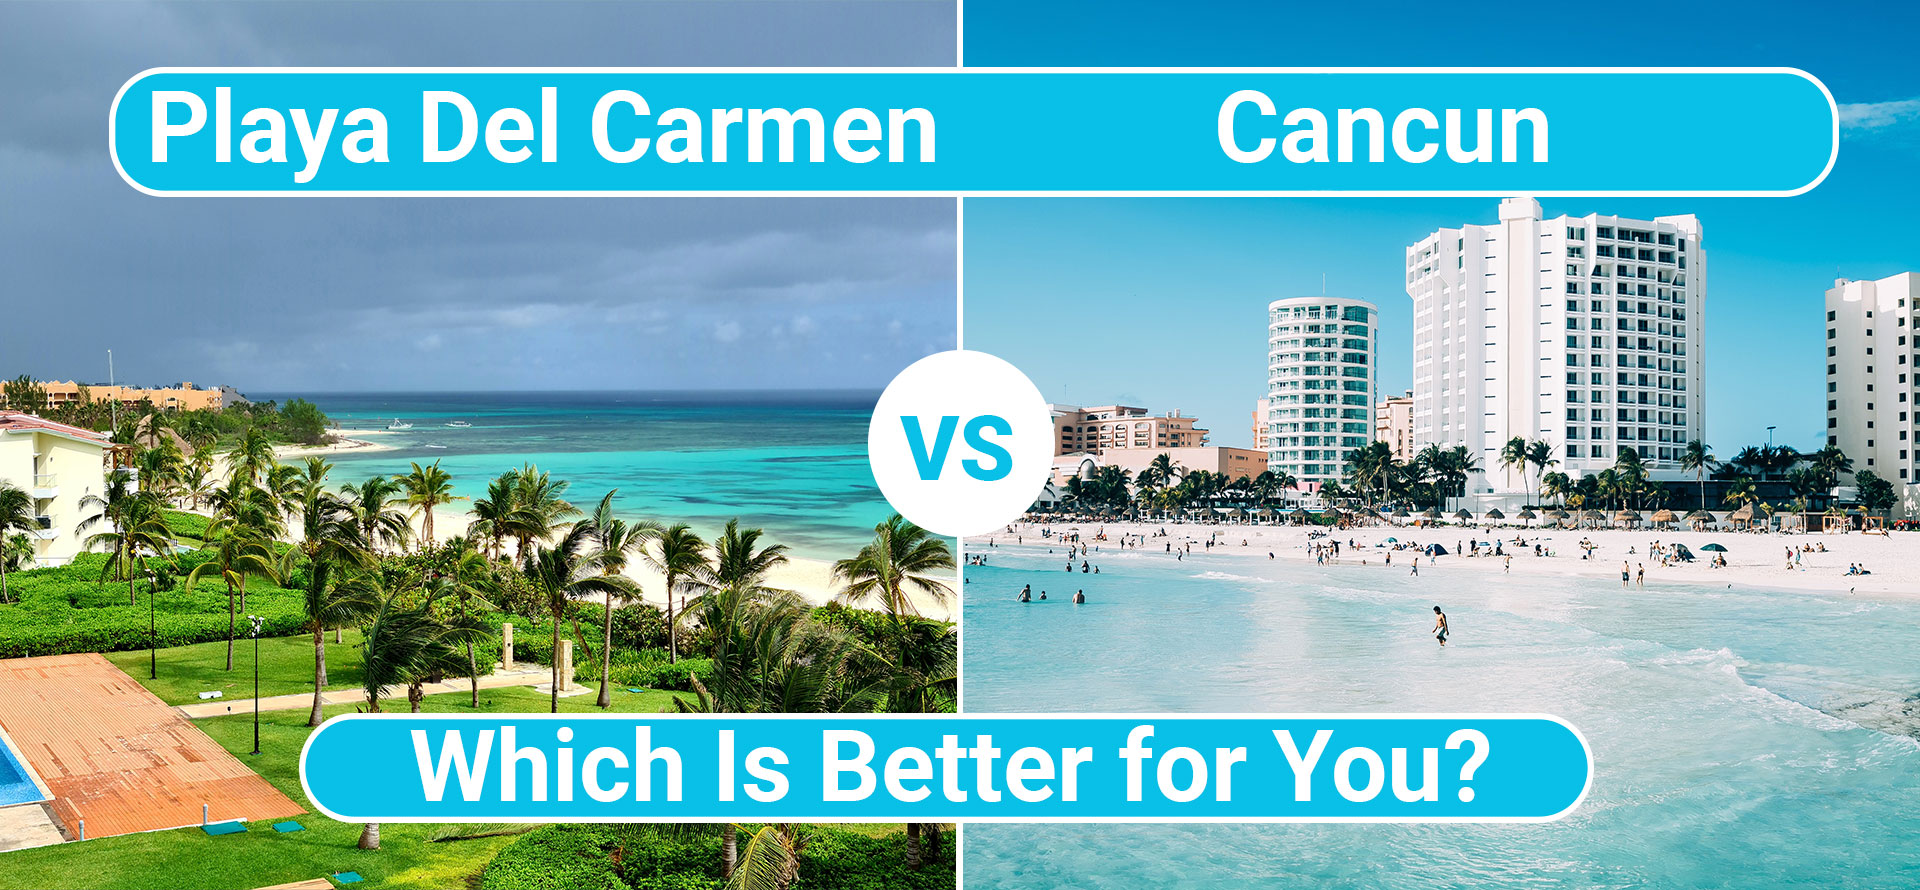 Playa del carmen vs cancun.